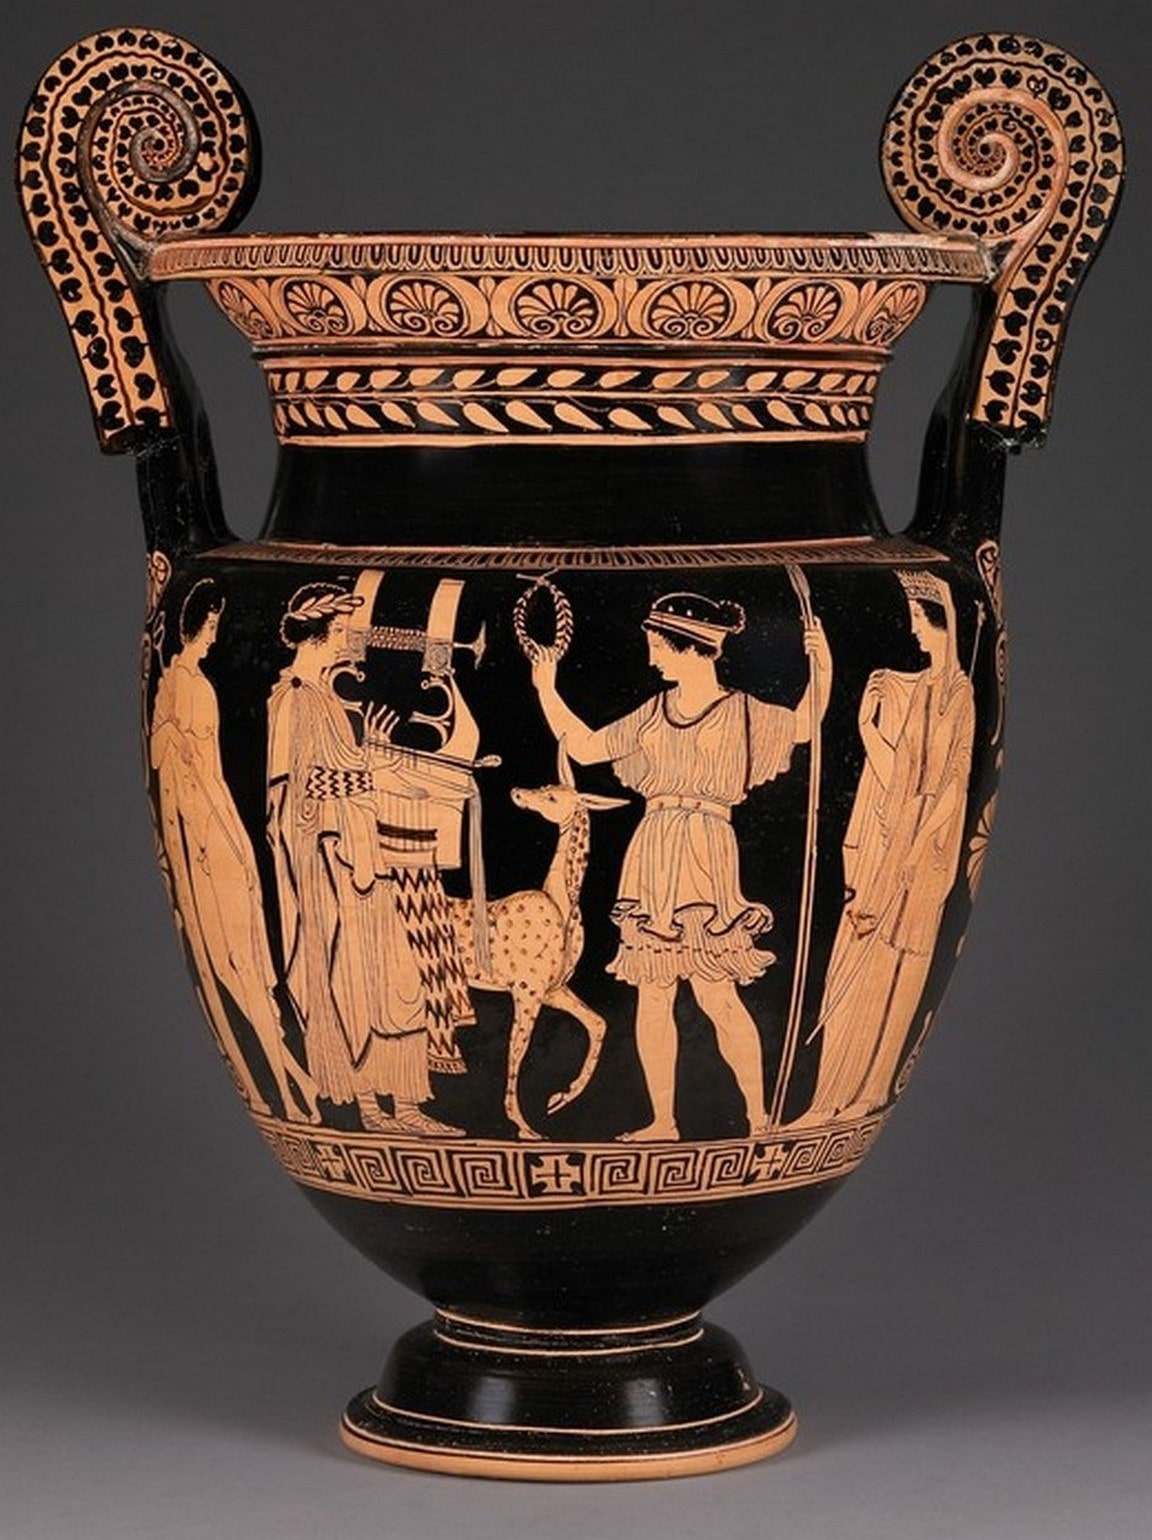 Орнамент древней Греции - керамика